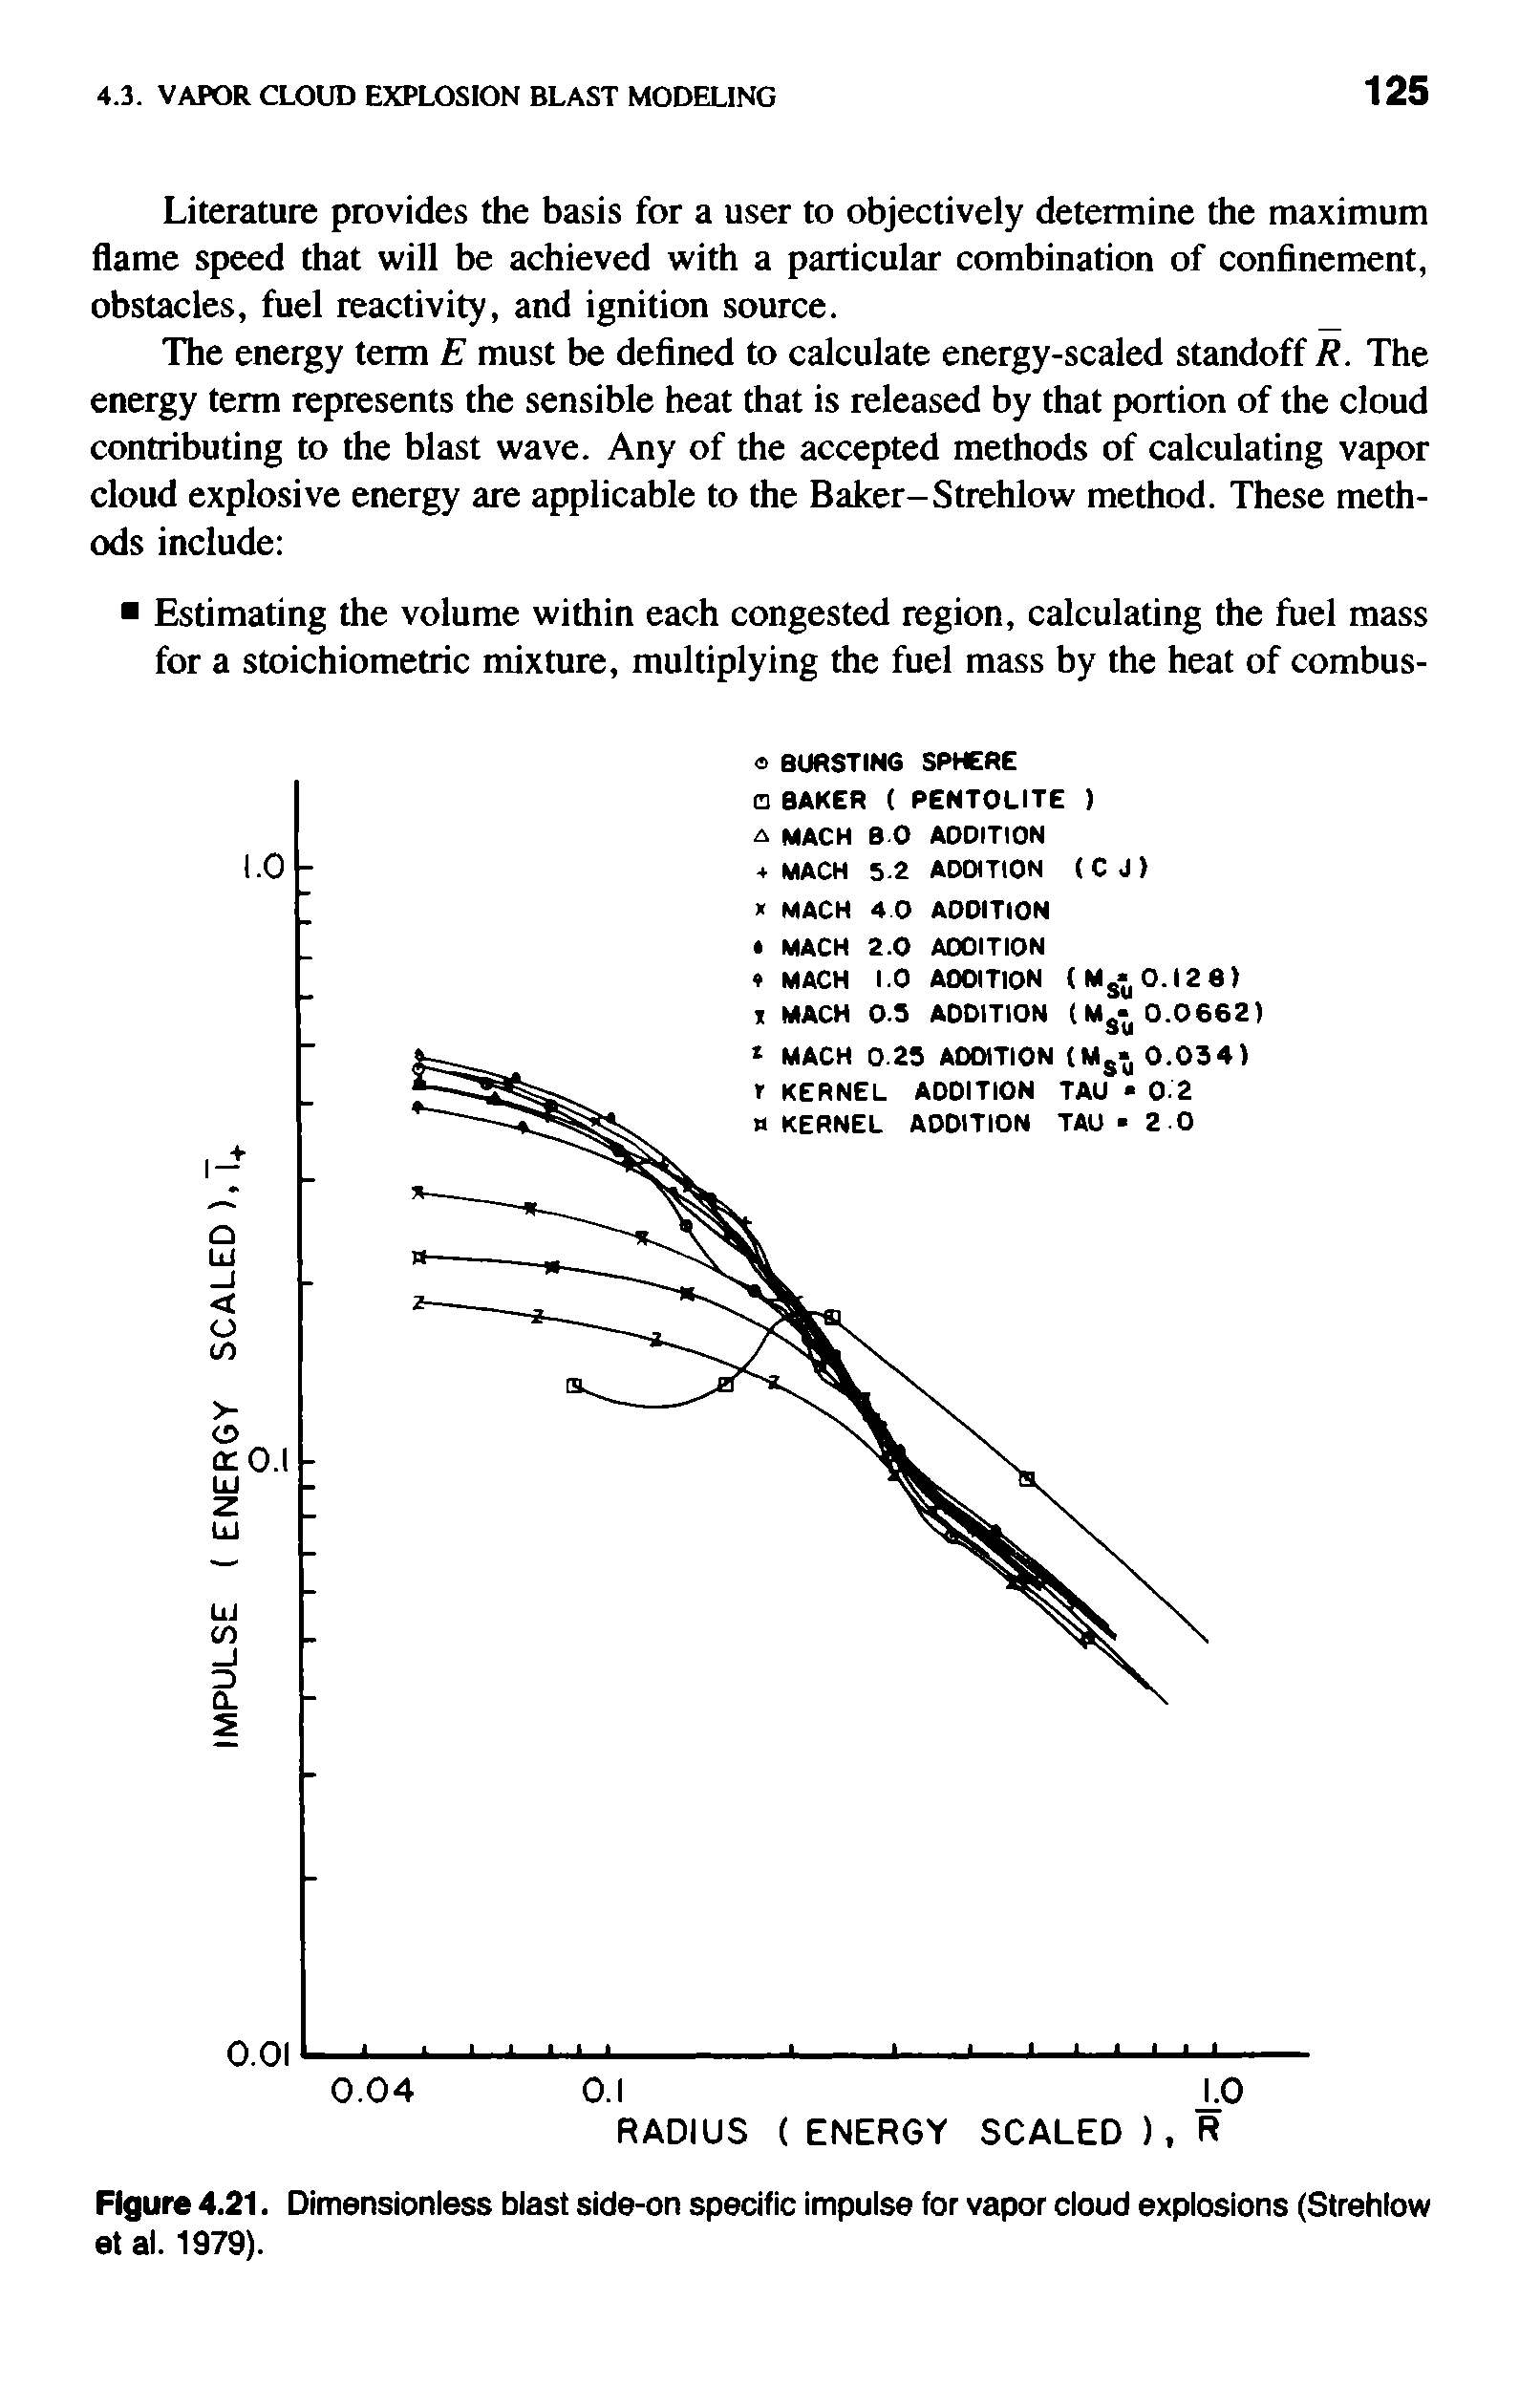 Figure 4.21. Dimensionless blast side-on specific impulse for vapor cloud explosions (Strehlow et al. 1979).